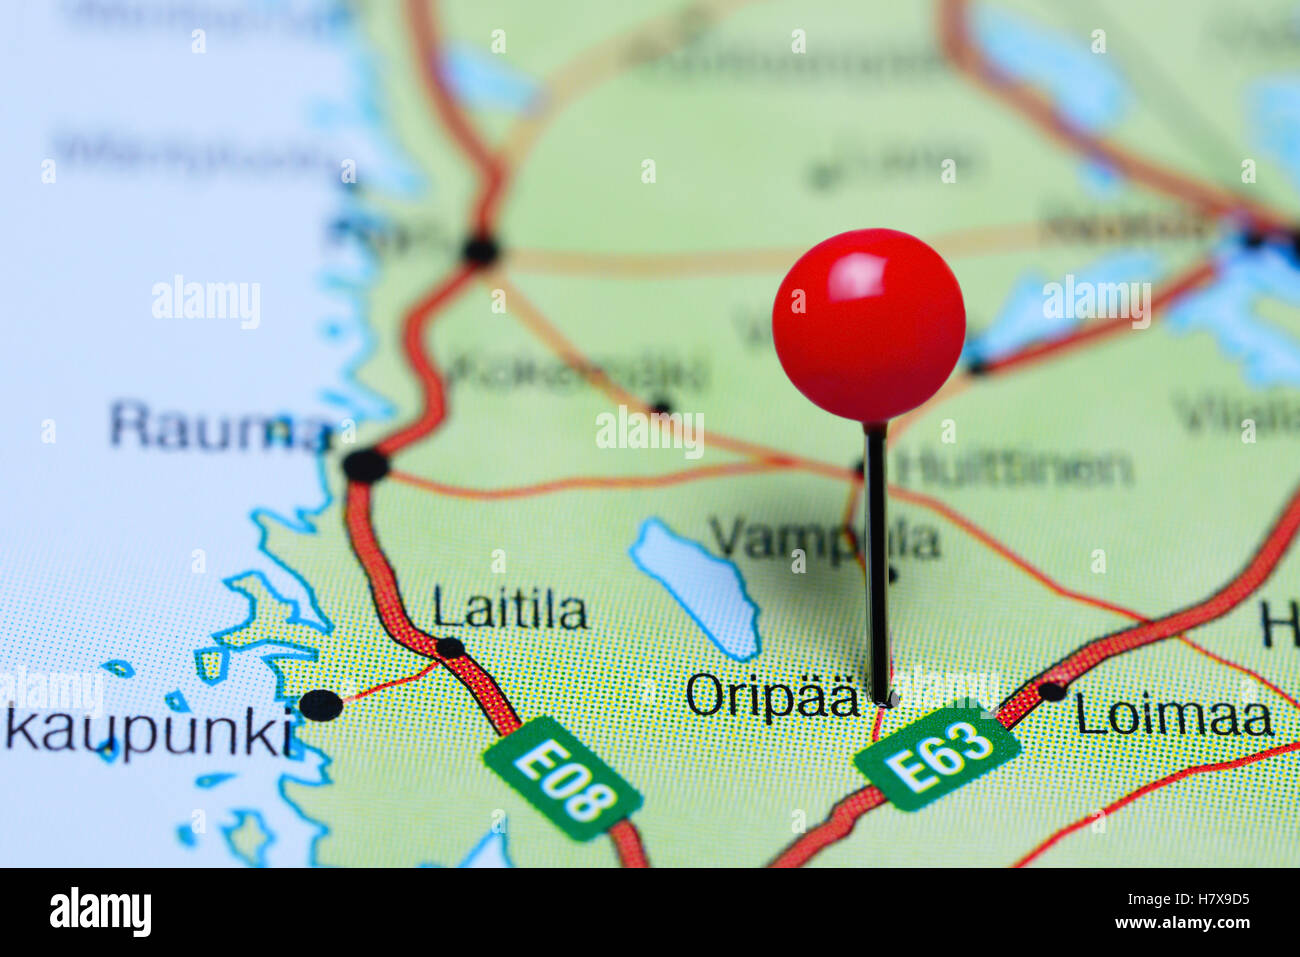 Oripaa pinned on a map of Finland Stock Photo